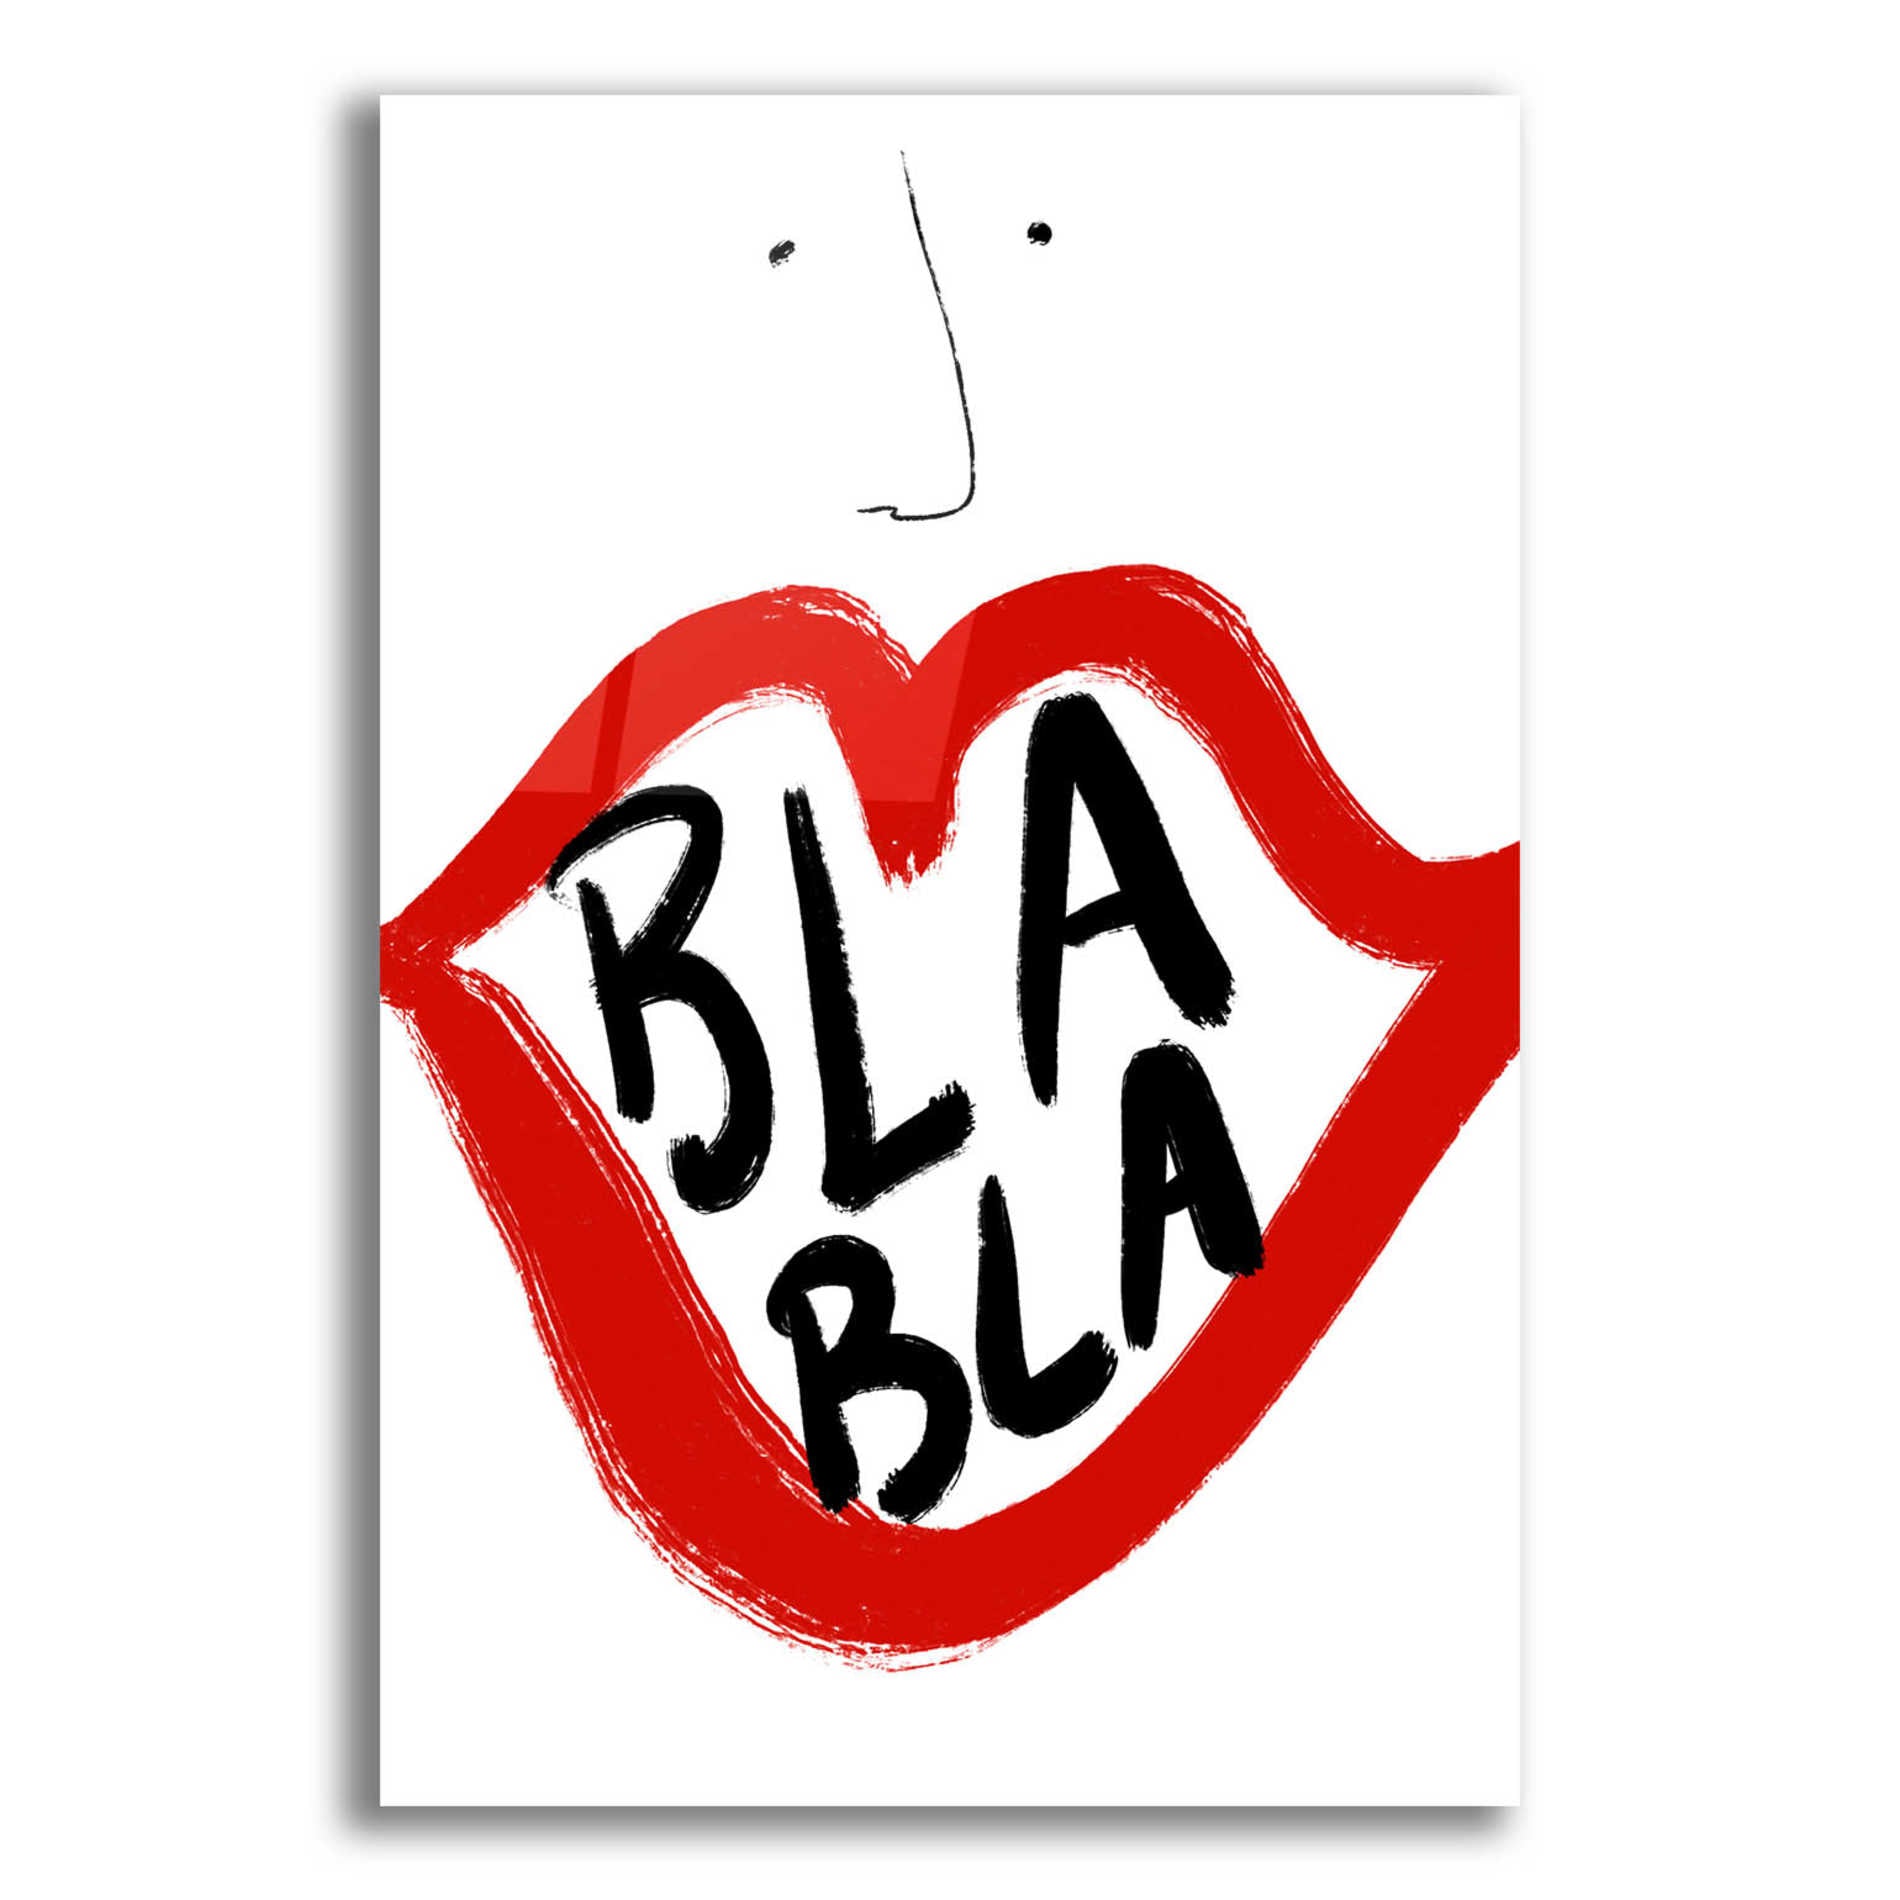 Epic Art 'Bla Bla' by Cesare Bellassai, Acrylic Glass Wall Art,16x24